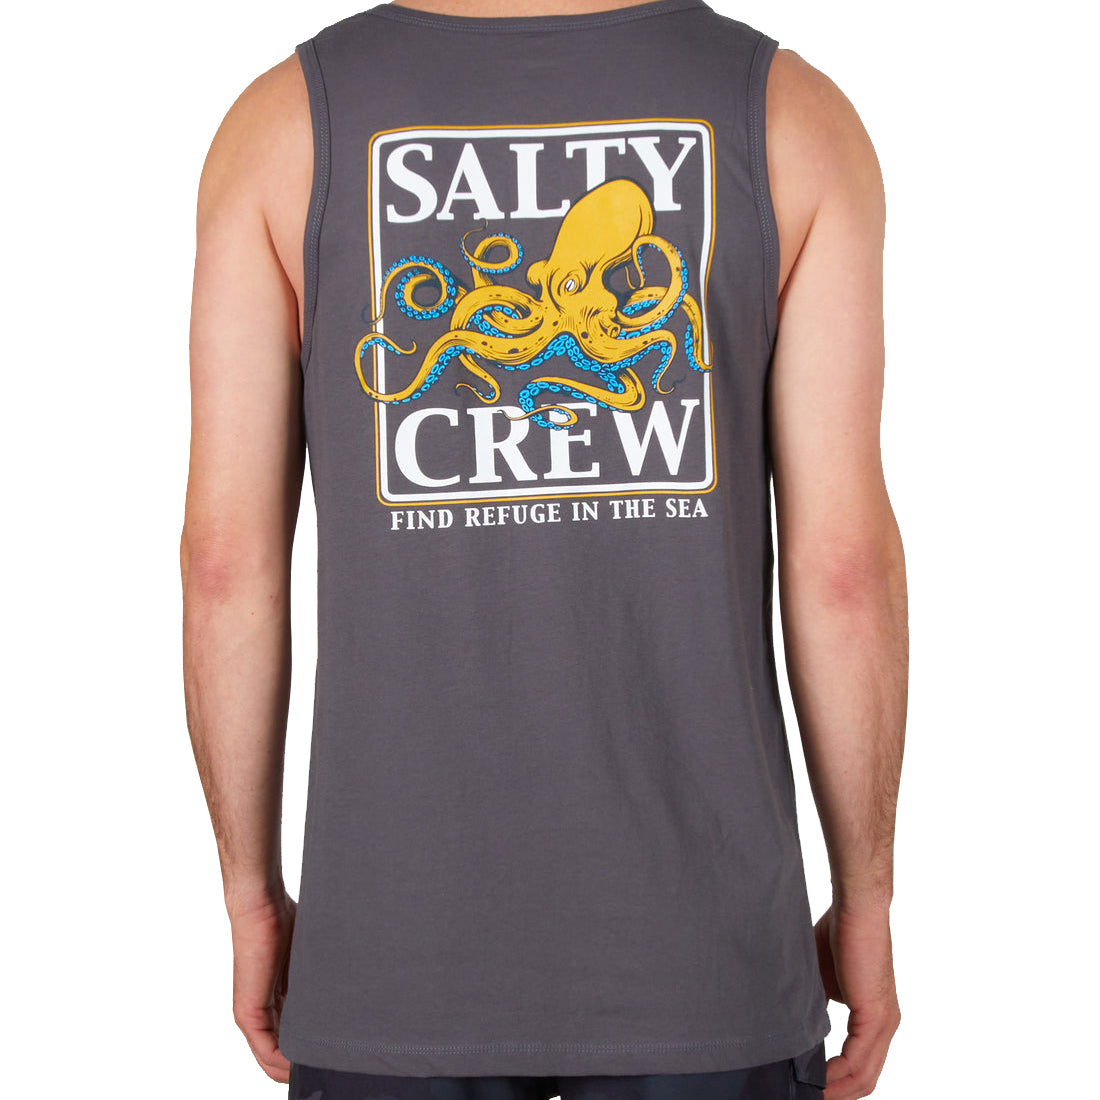 Salty Crew Ink Slinger Tank Charcoal S